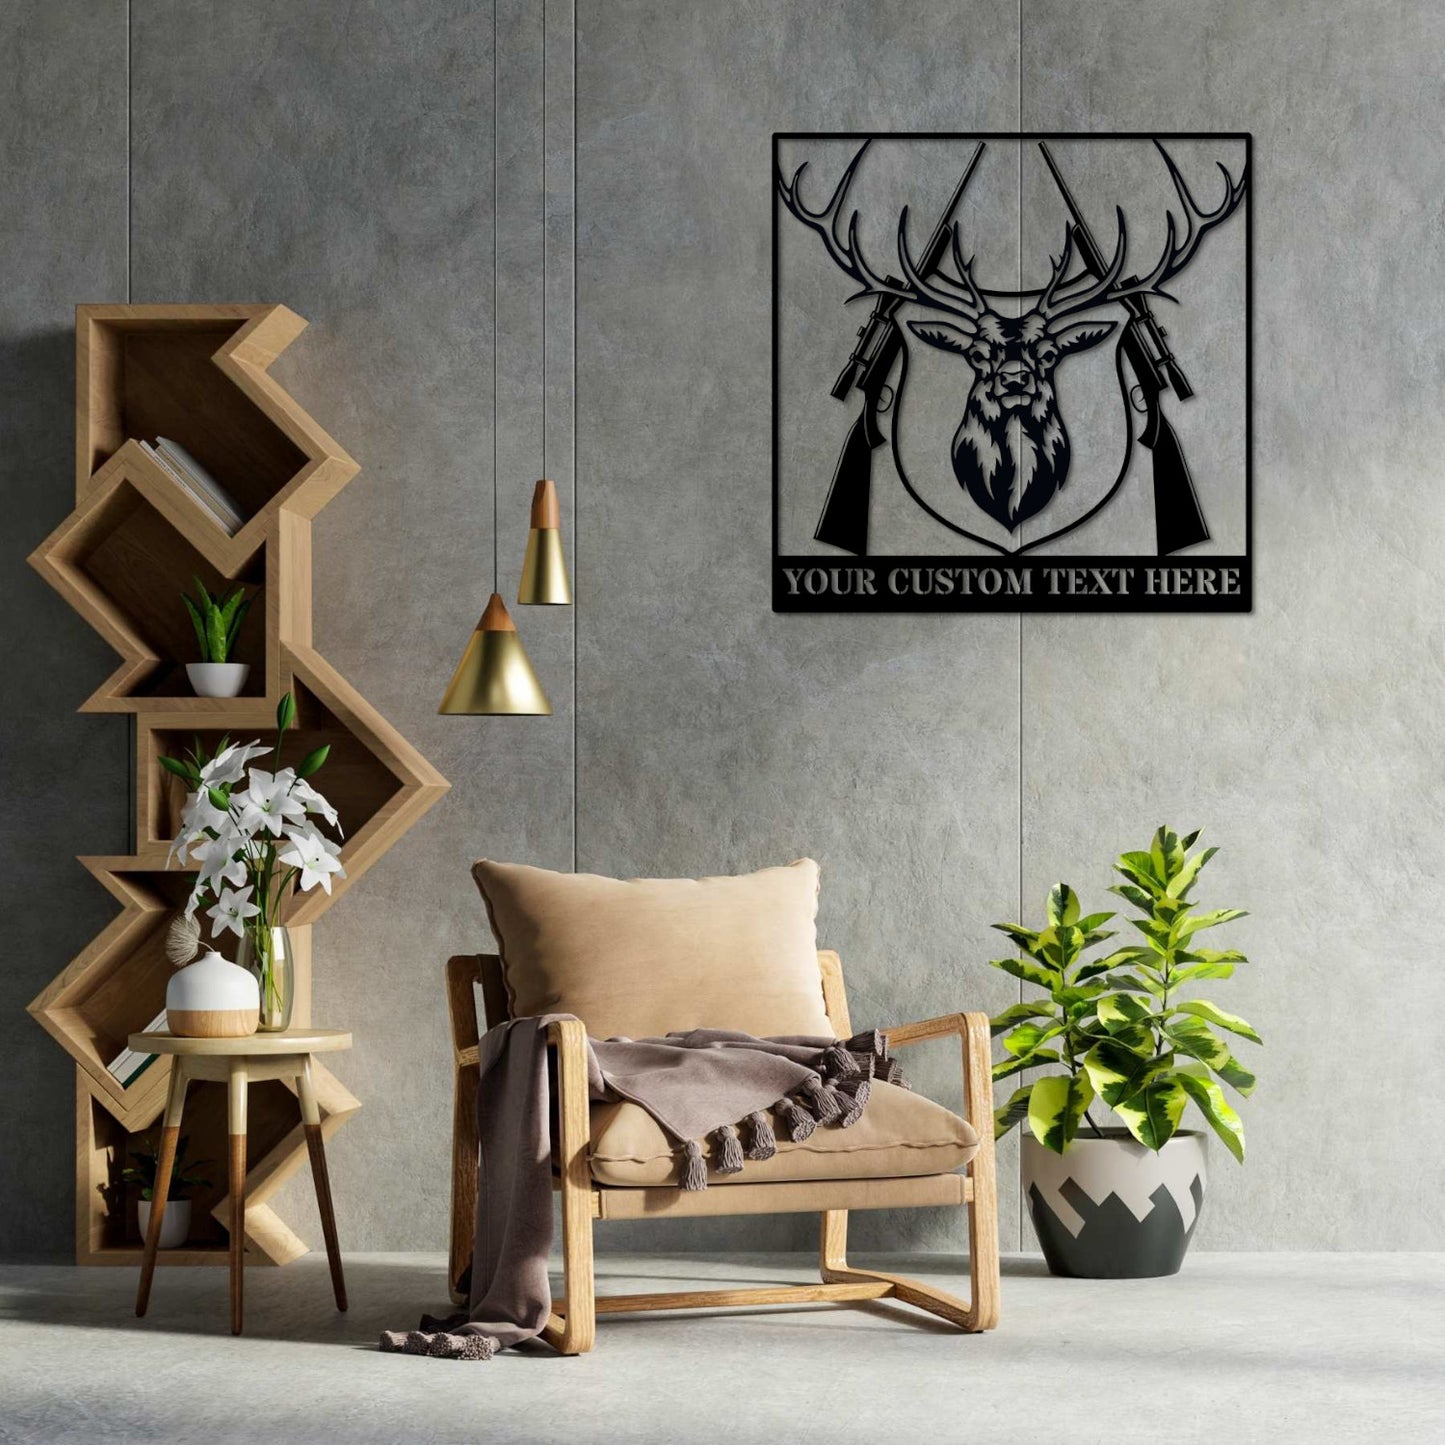 Personalized Deer Head Plaque Name Metal Sign. Customizable Deer Hunter Wall Decor Gift. Hunting Trophy Steel Sign. Deer Head Portrait Gift